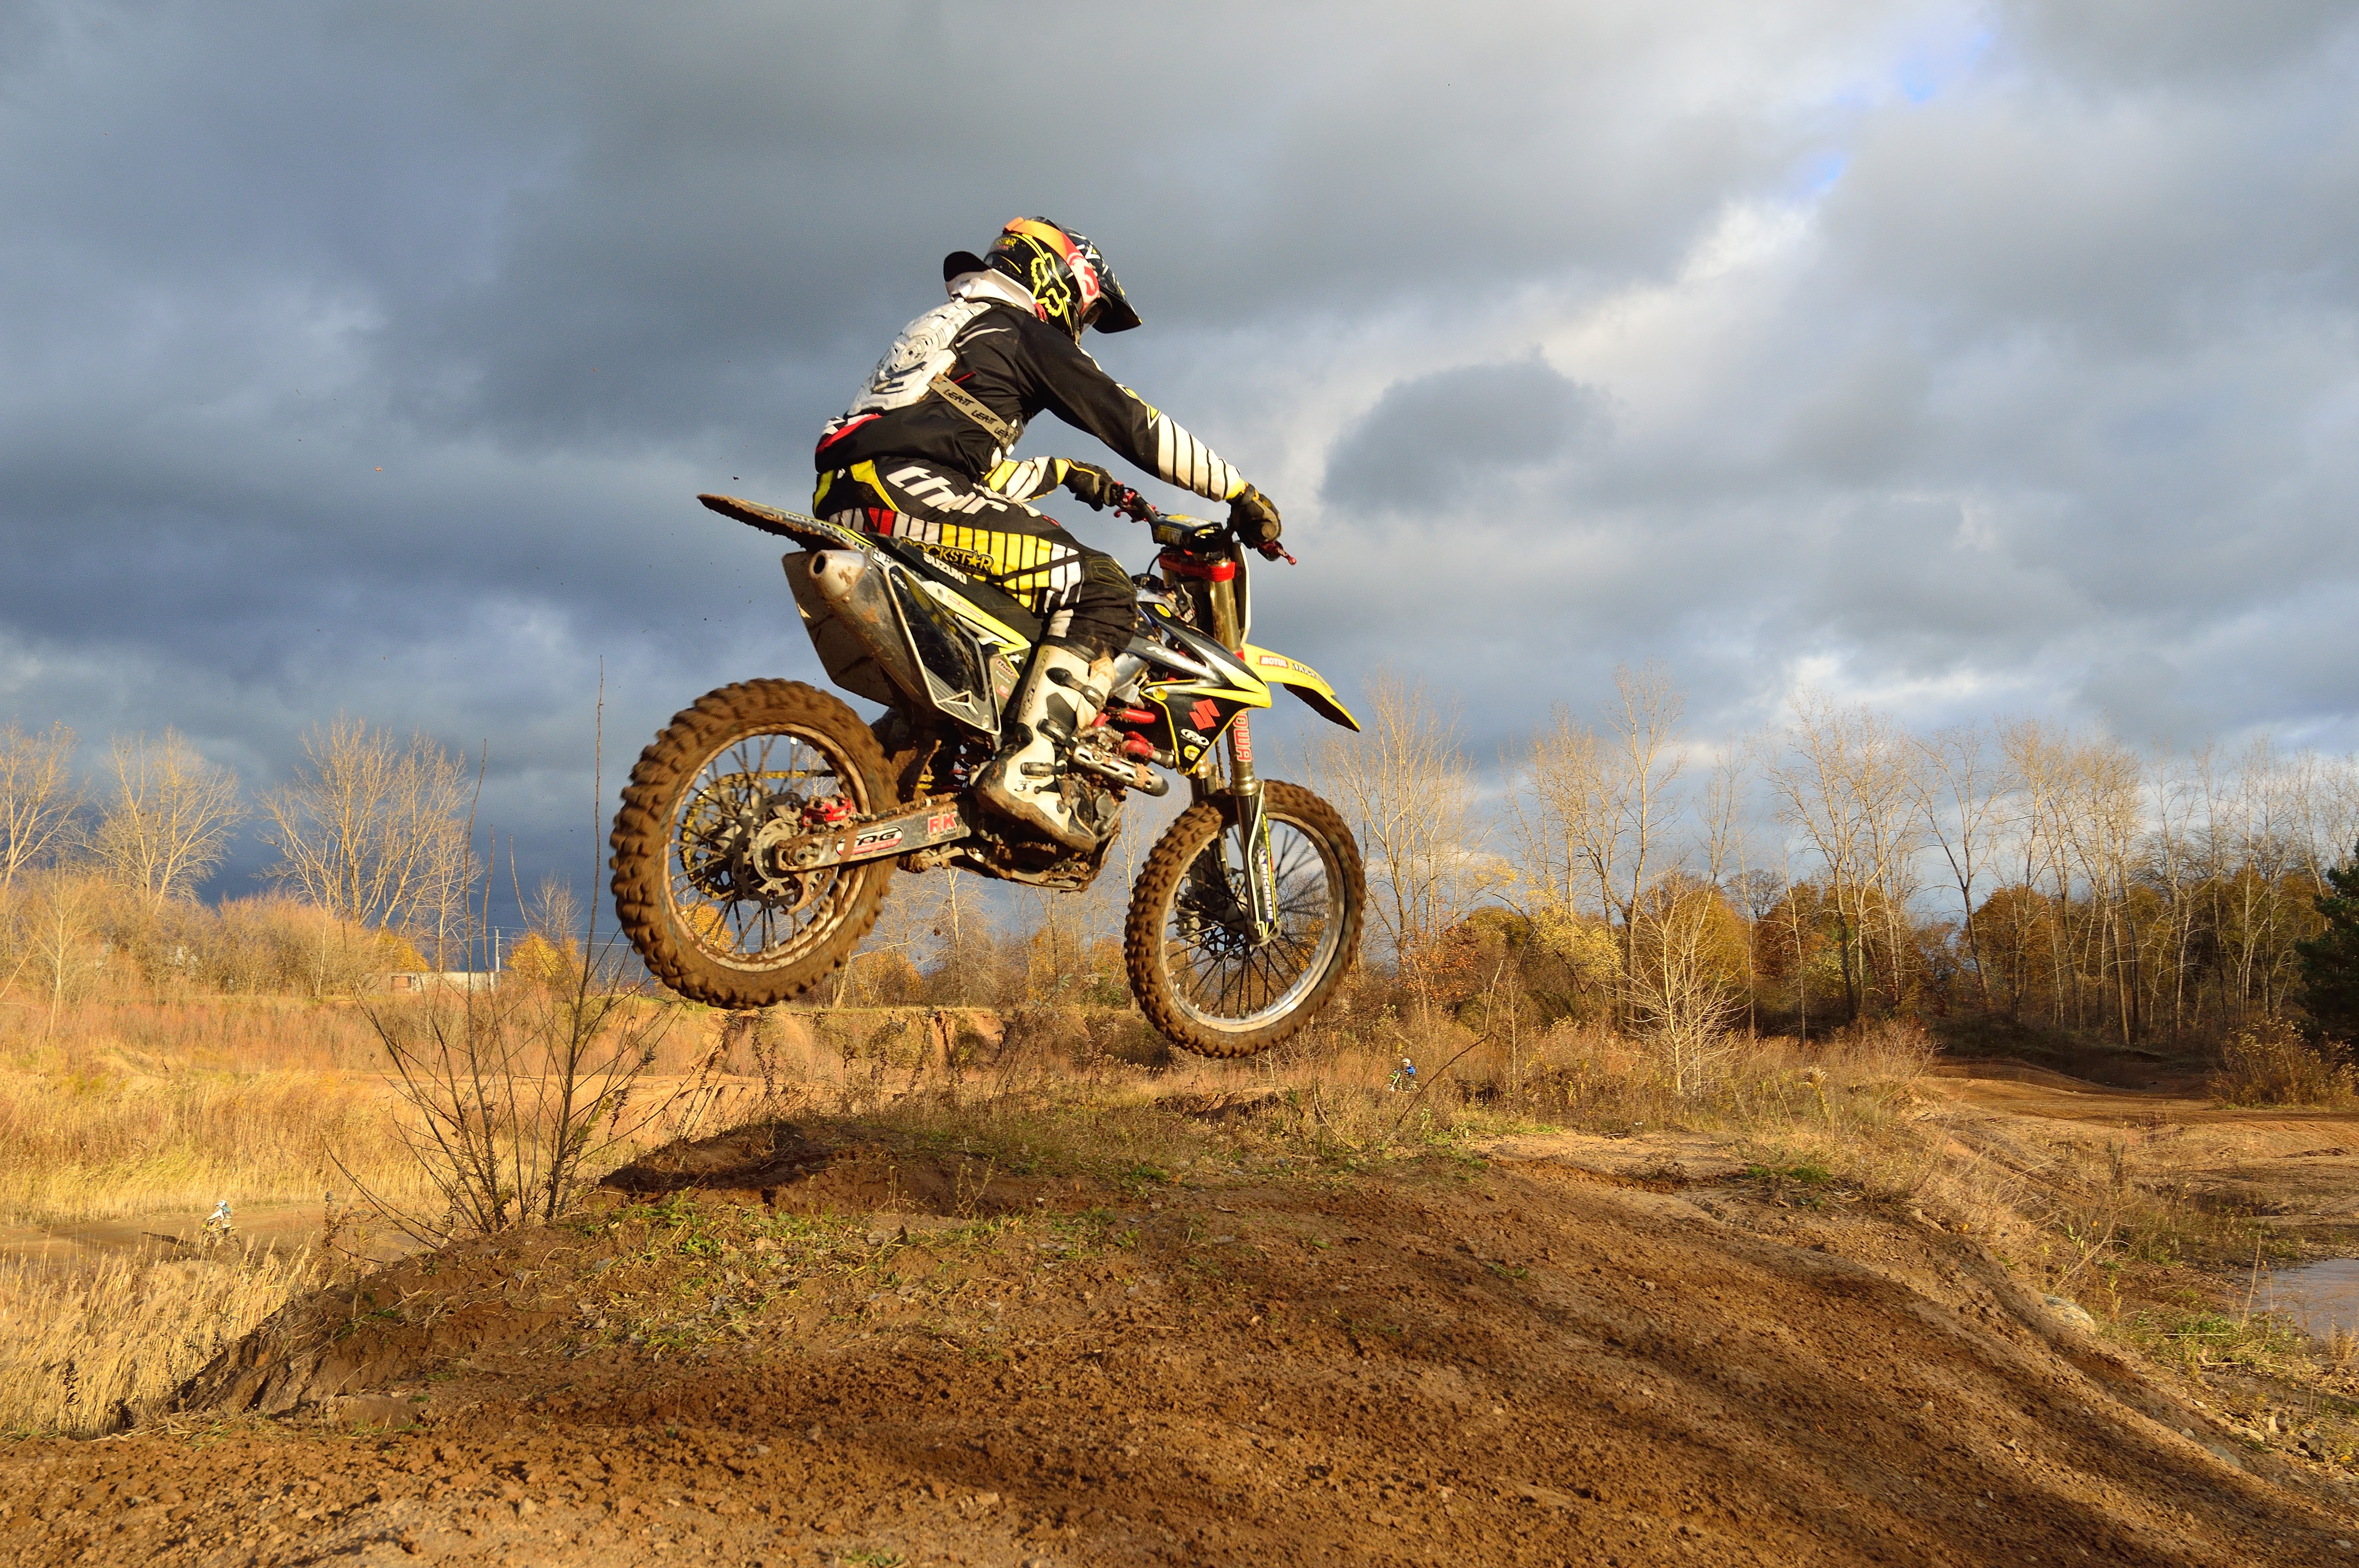 Motocross rider on his dirt bike during daytime photo